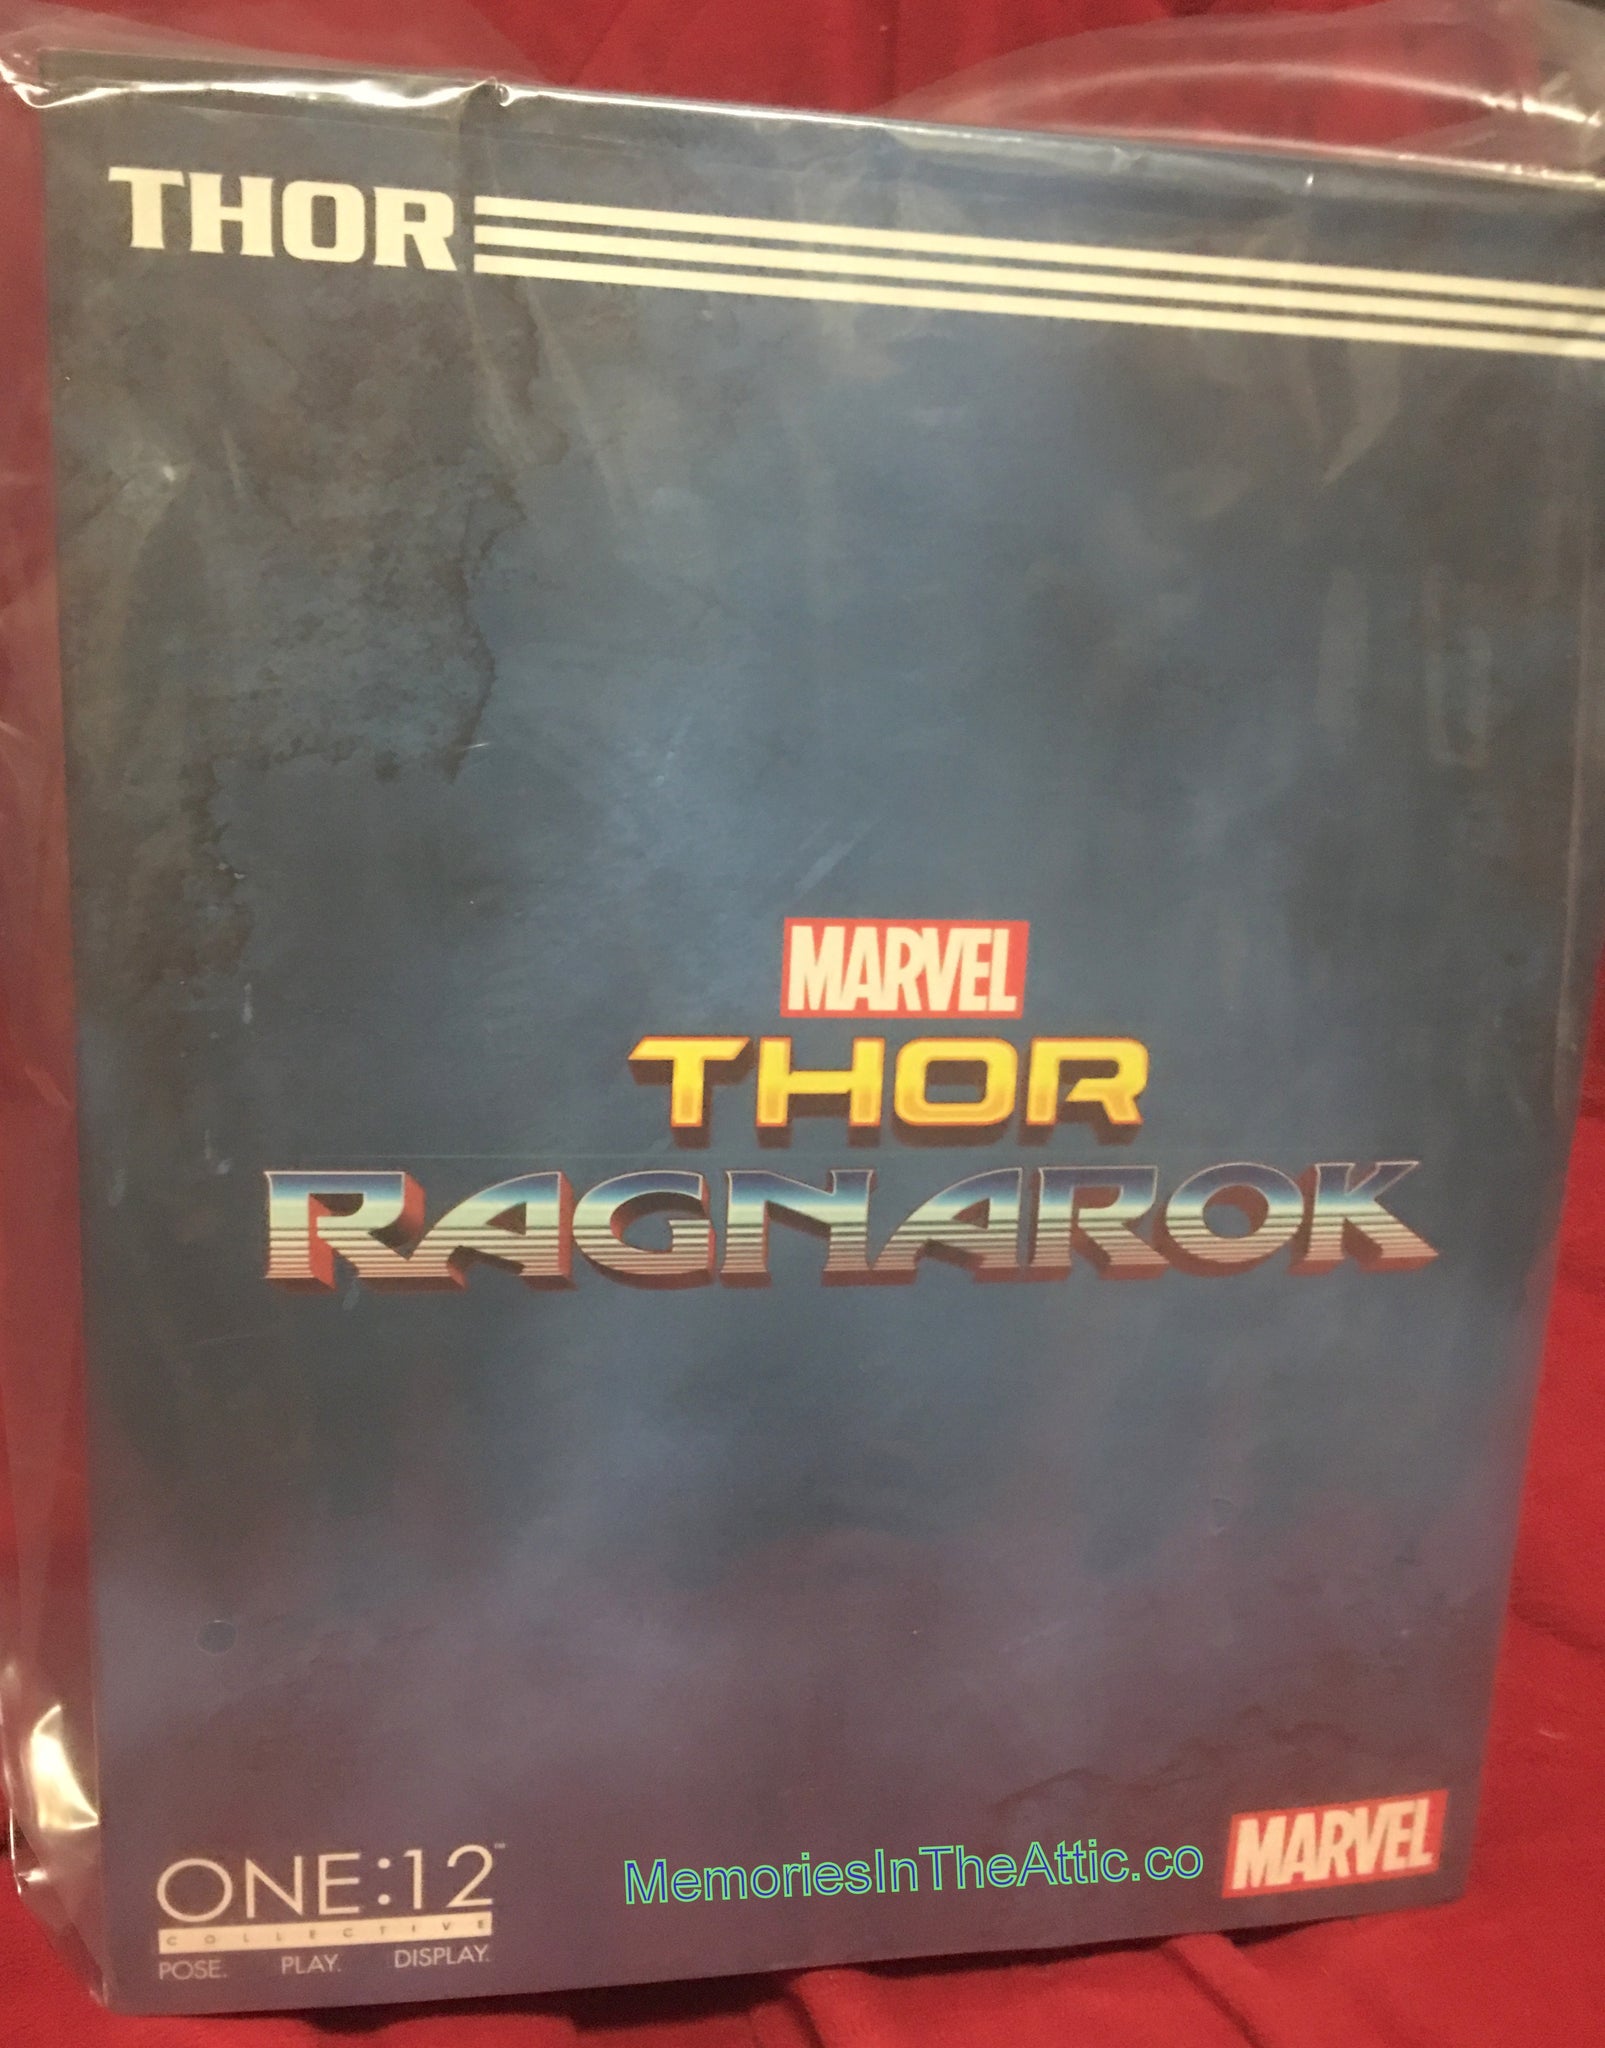 Thor Ragnarok Thor One:12 Collective Action Figure